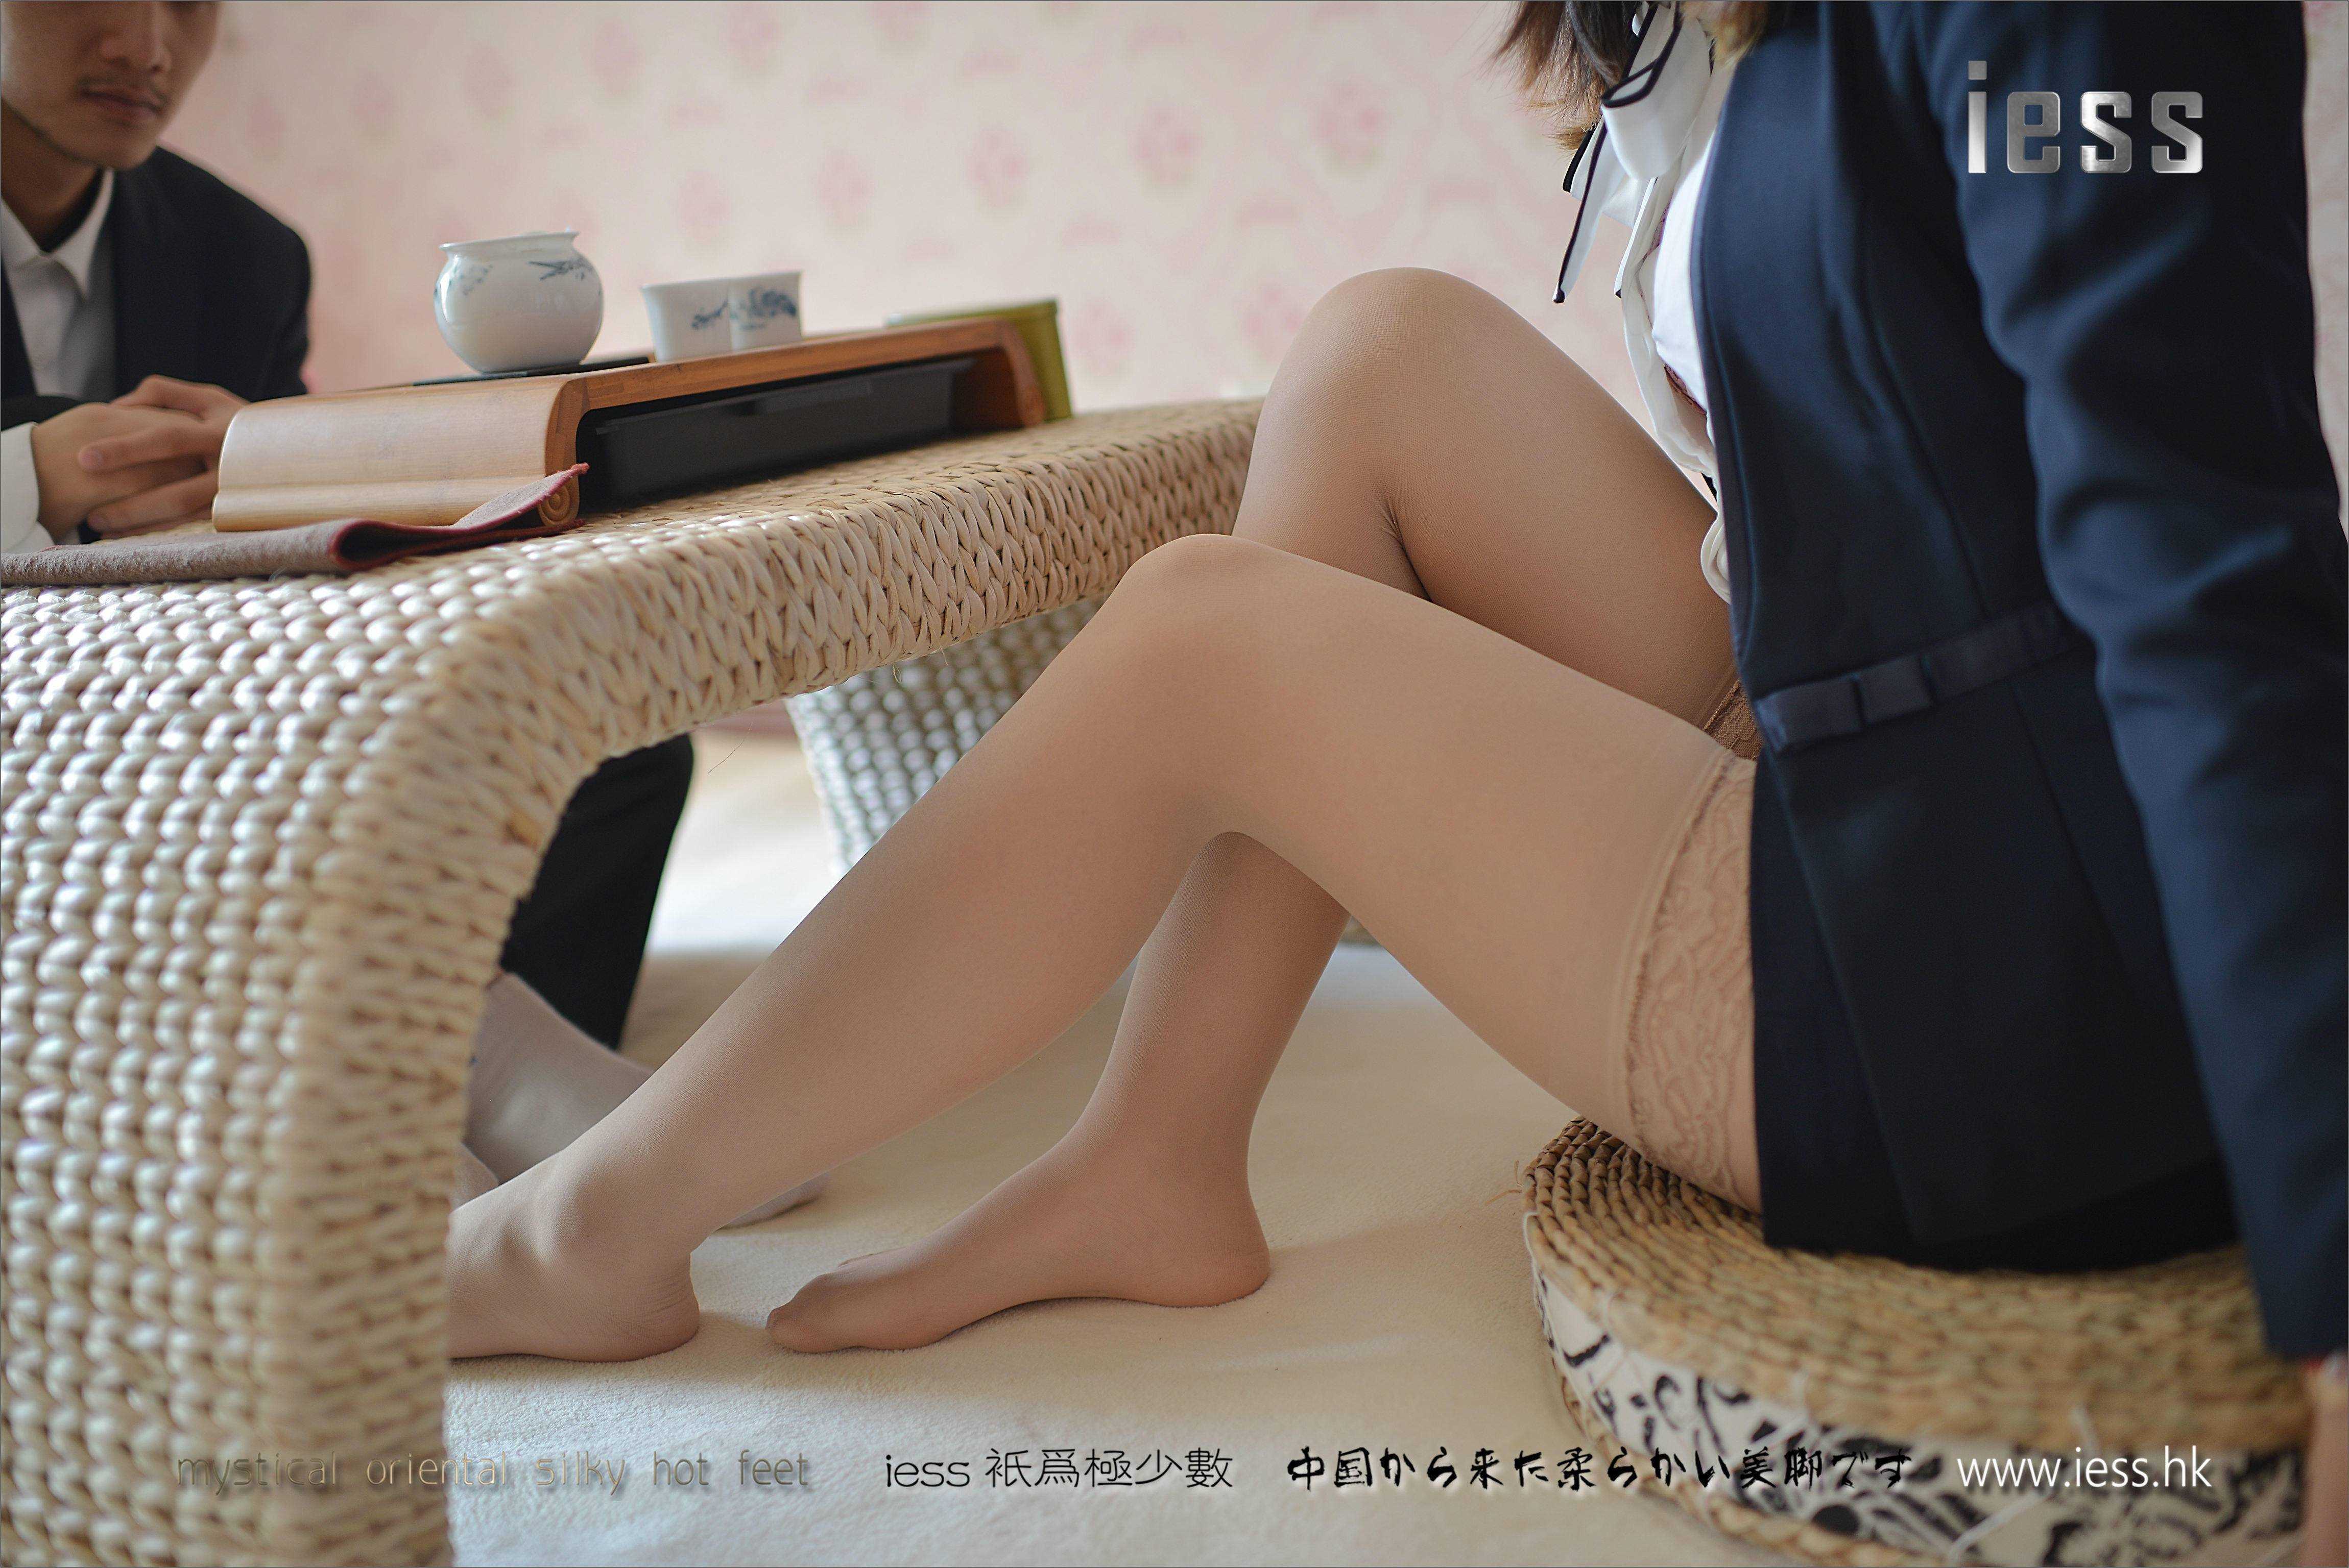 China Beauty Legs and feet 212